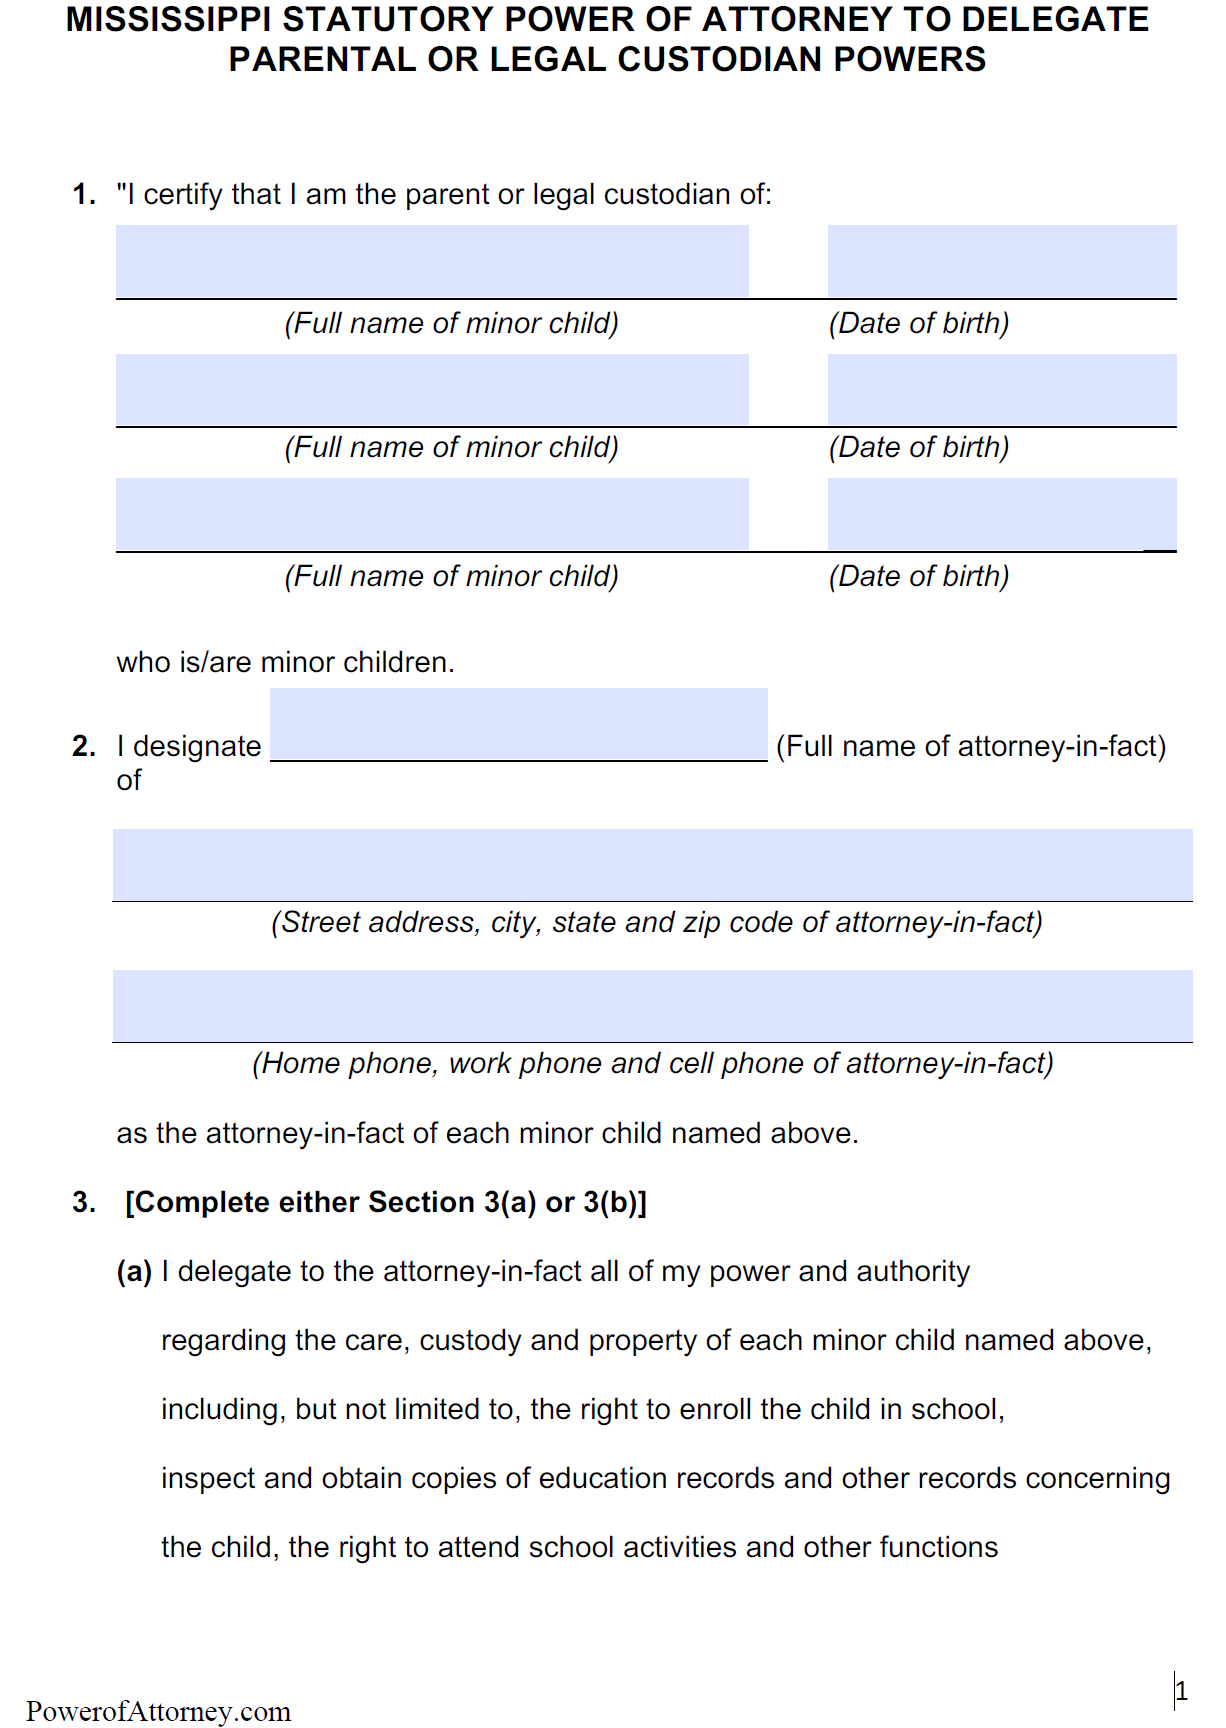 free-minor-child-power-of-attorney-mississippi-form-pdf